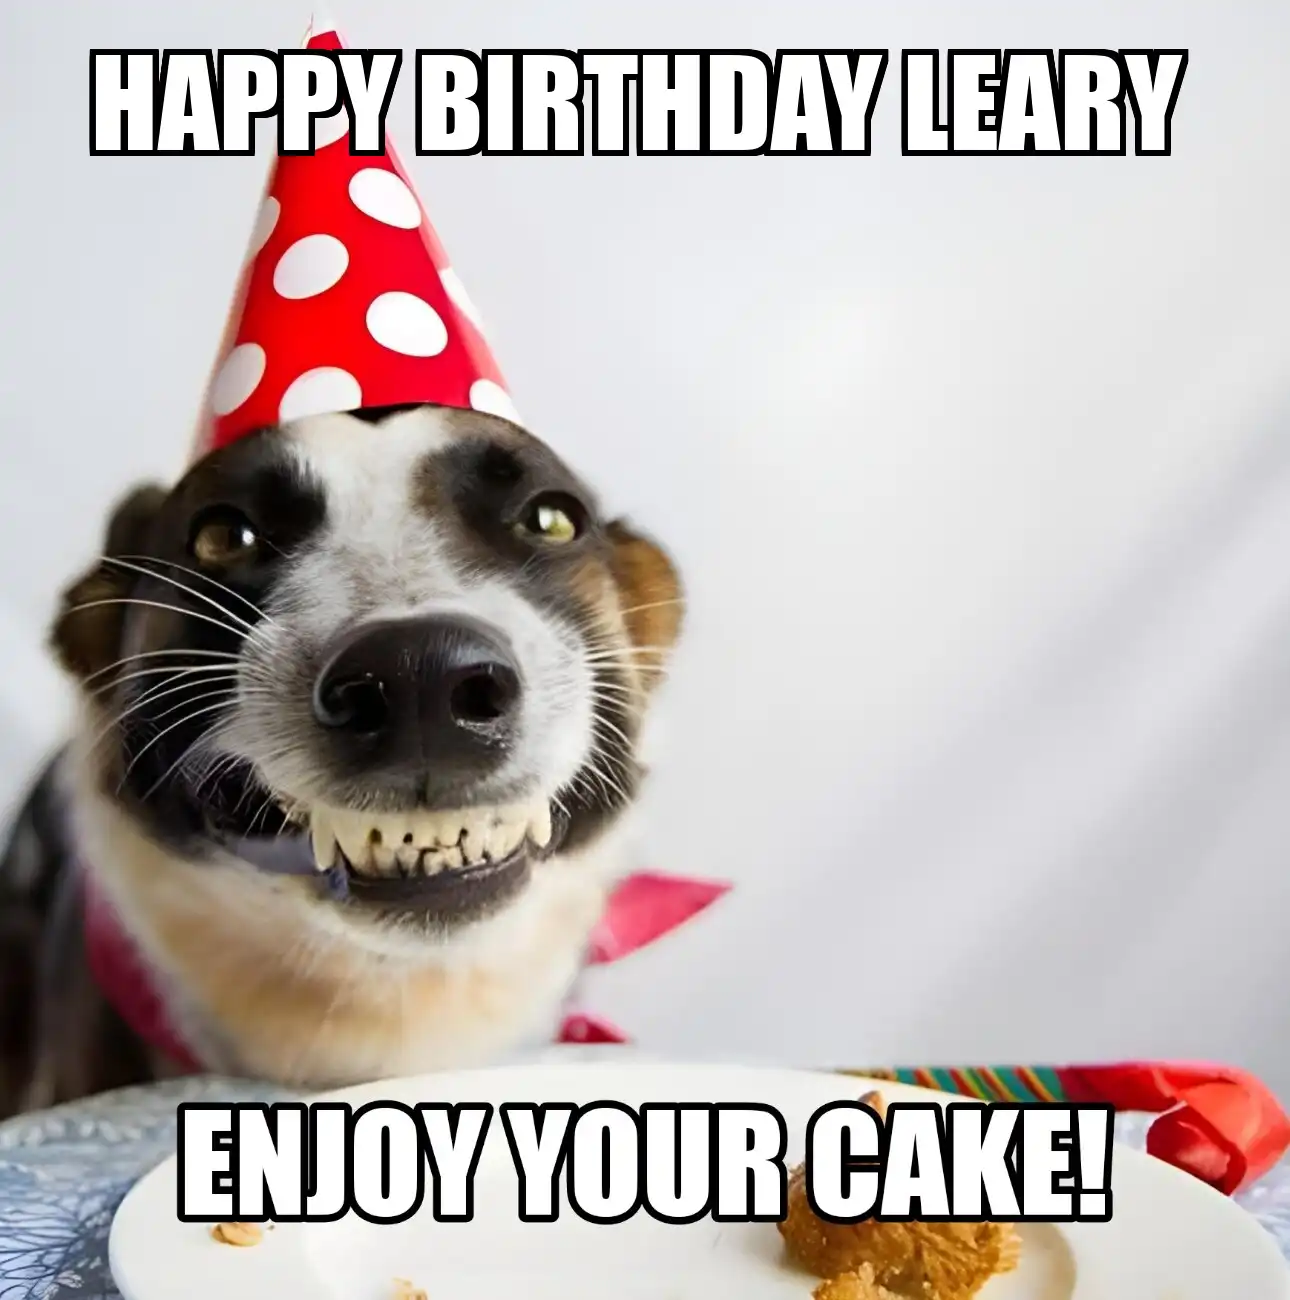 Happy Birthday Leary Enjoy Your Cake Dog Meme